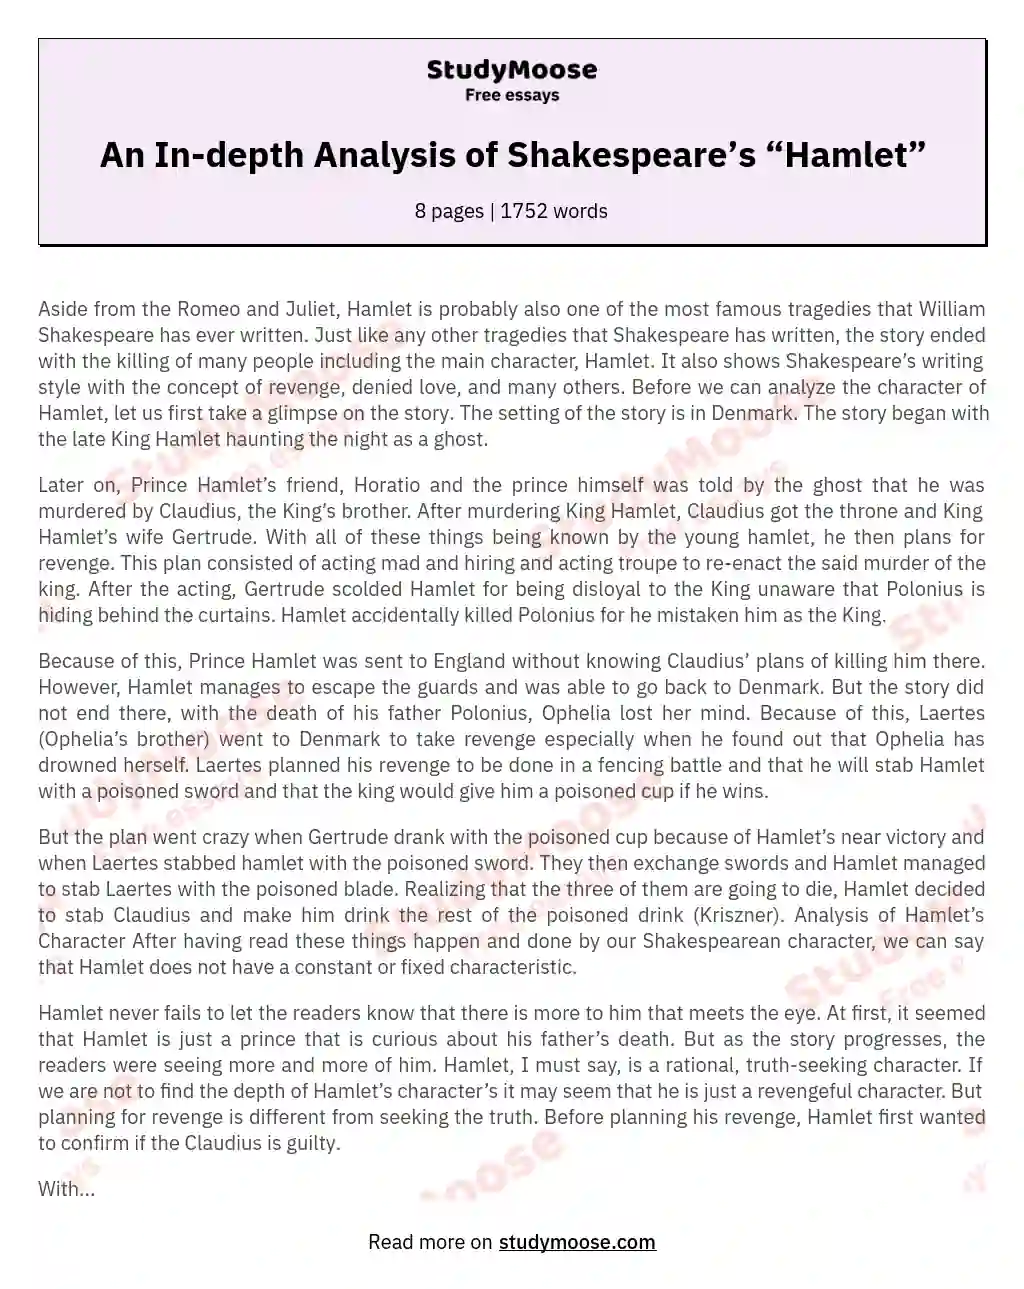 An In-depth Analysis of Shakespeare’s “Hamlet” essay